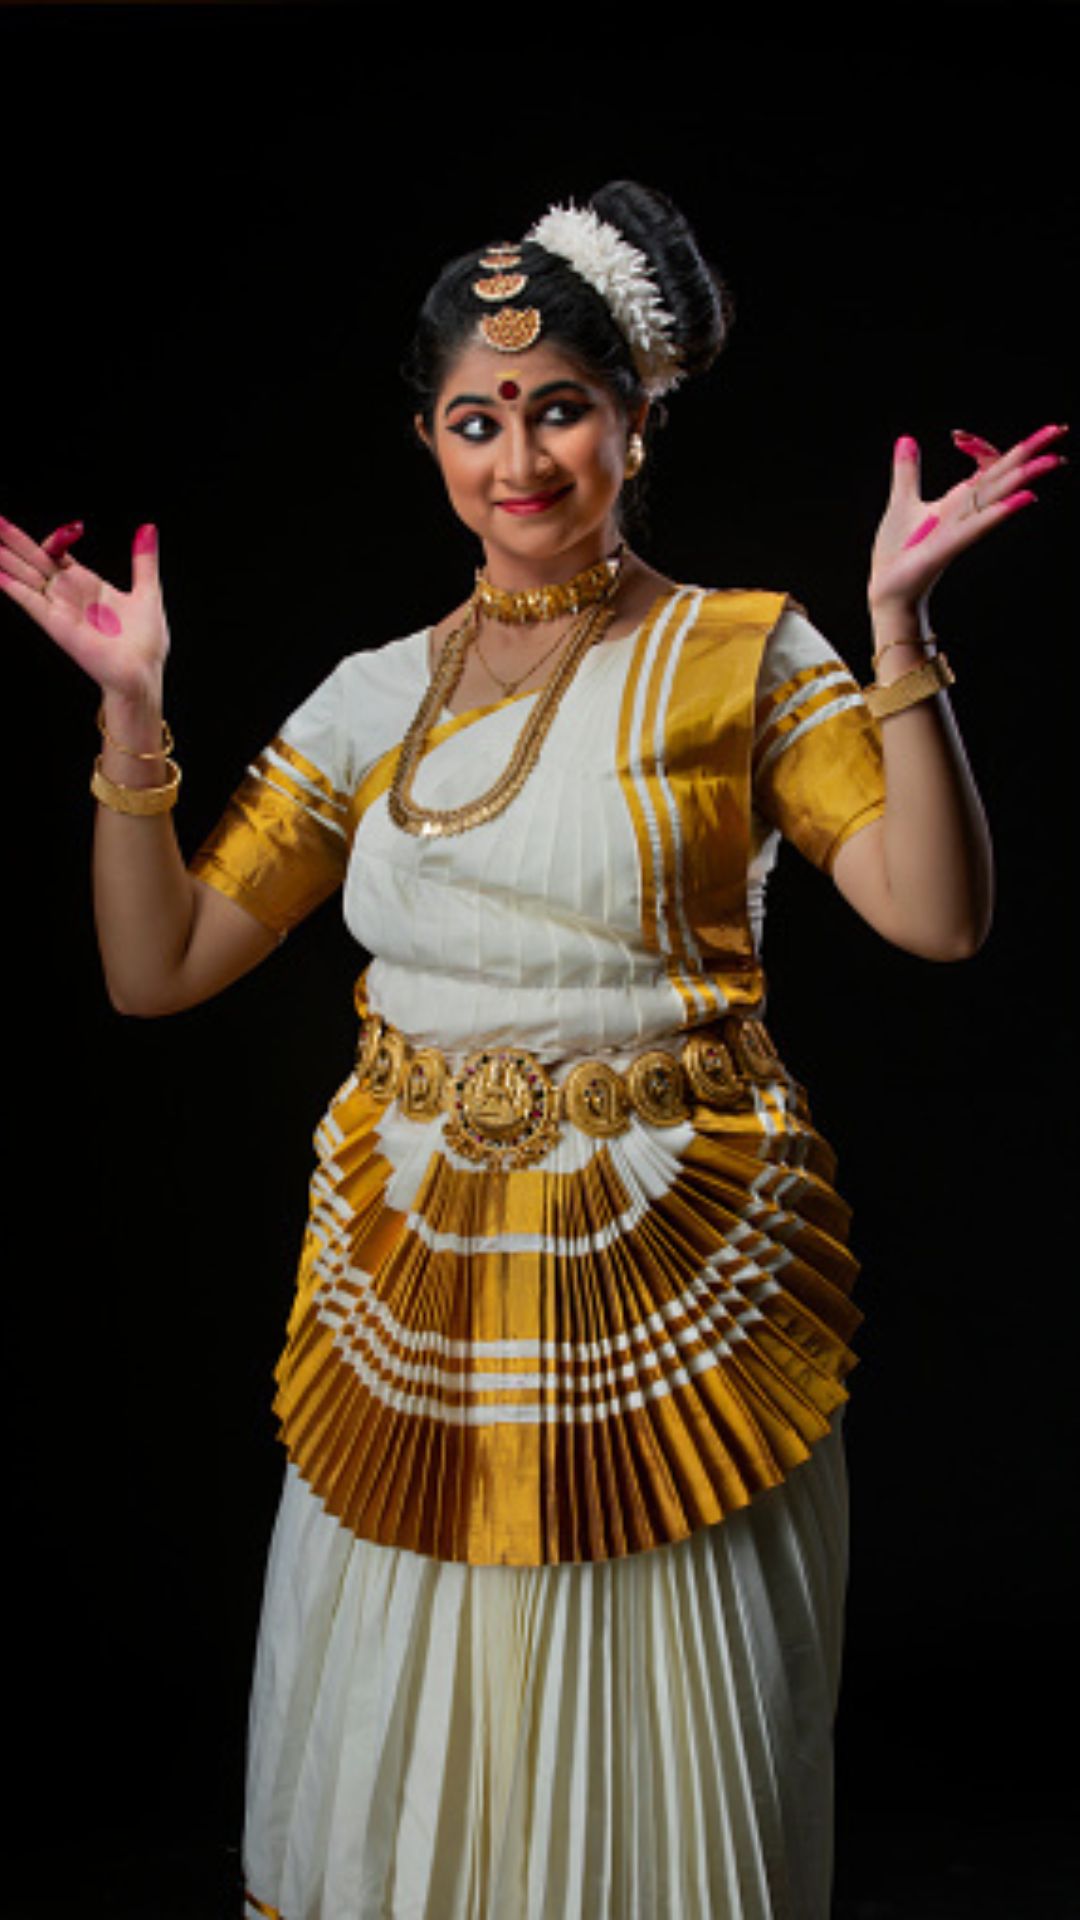 Manipuri dance - Wikipedia